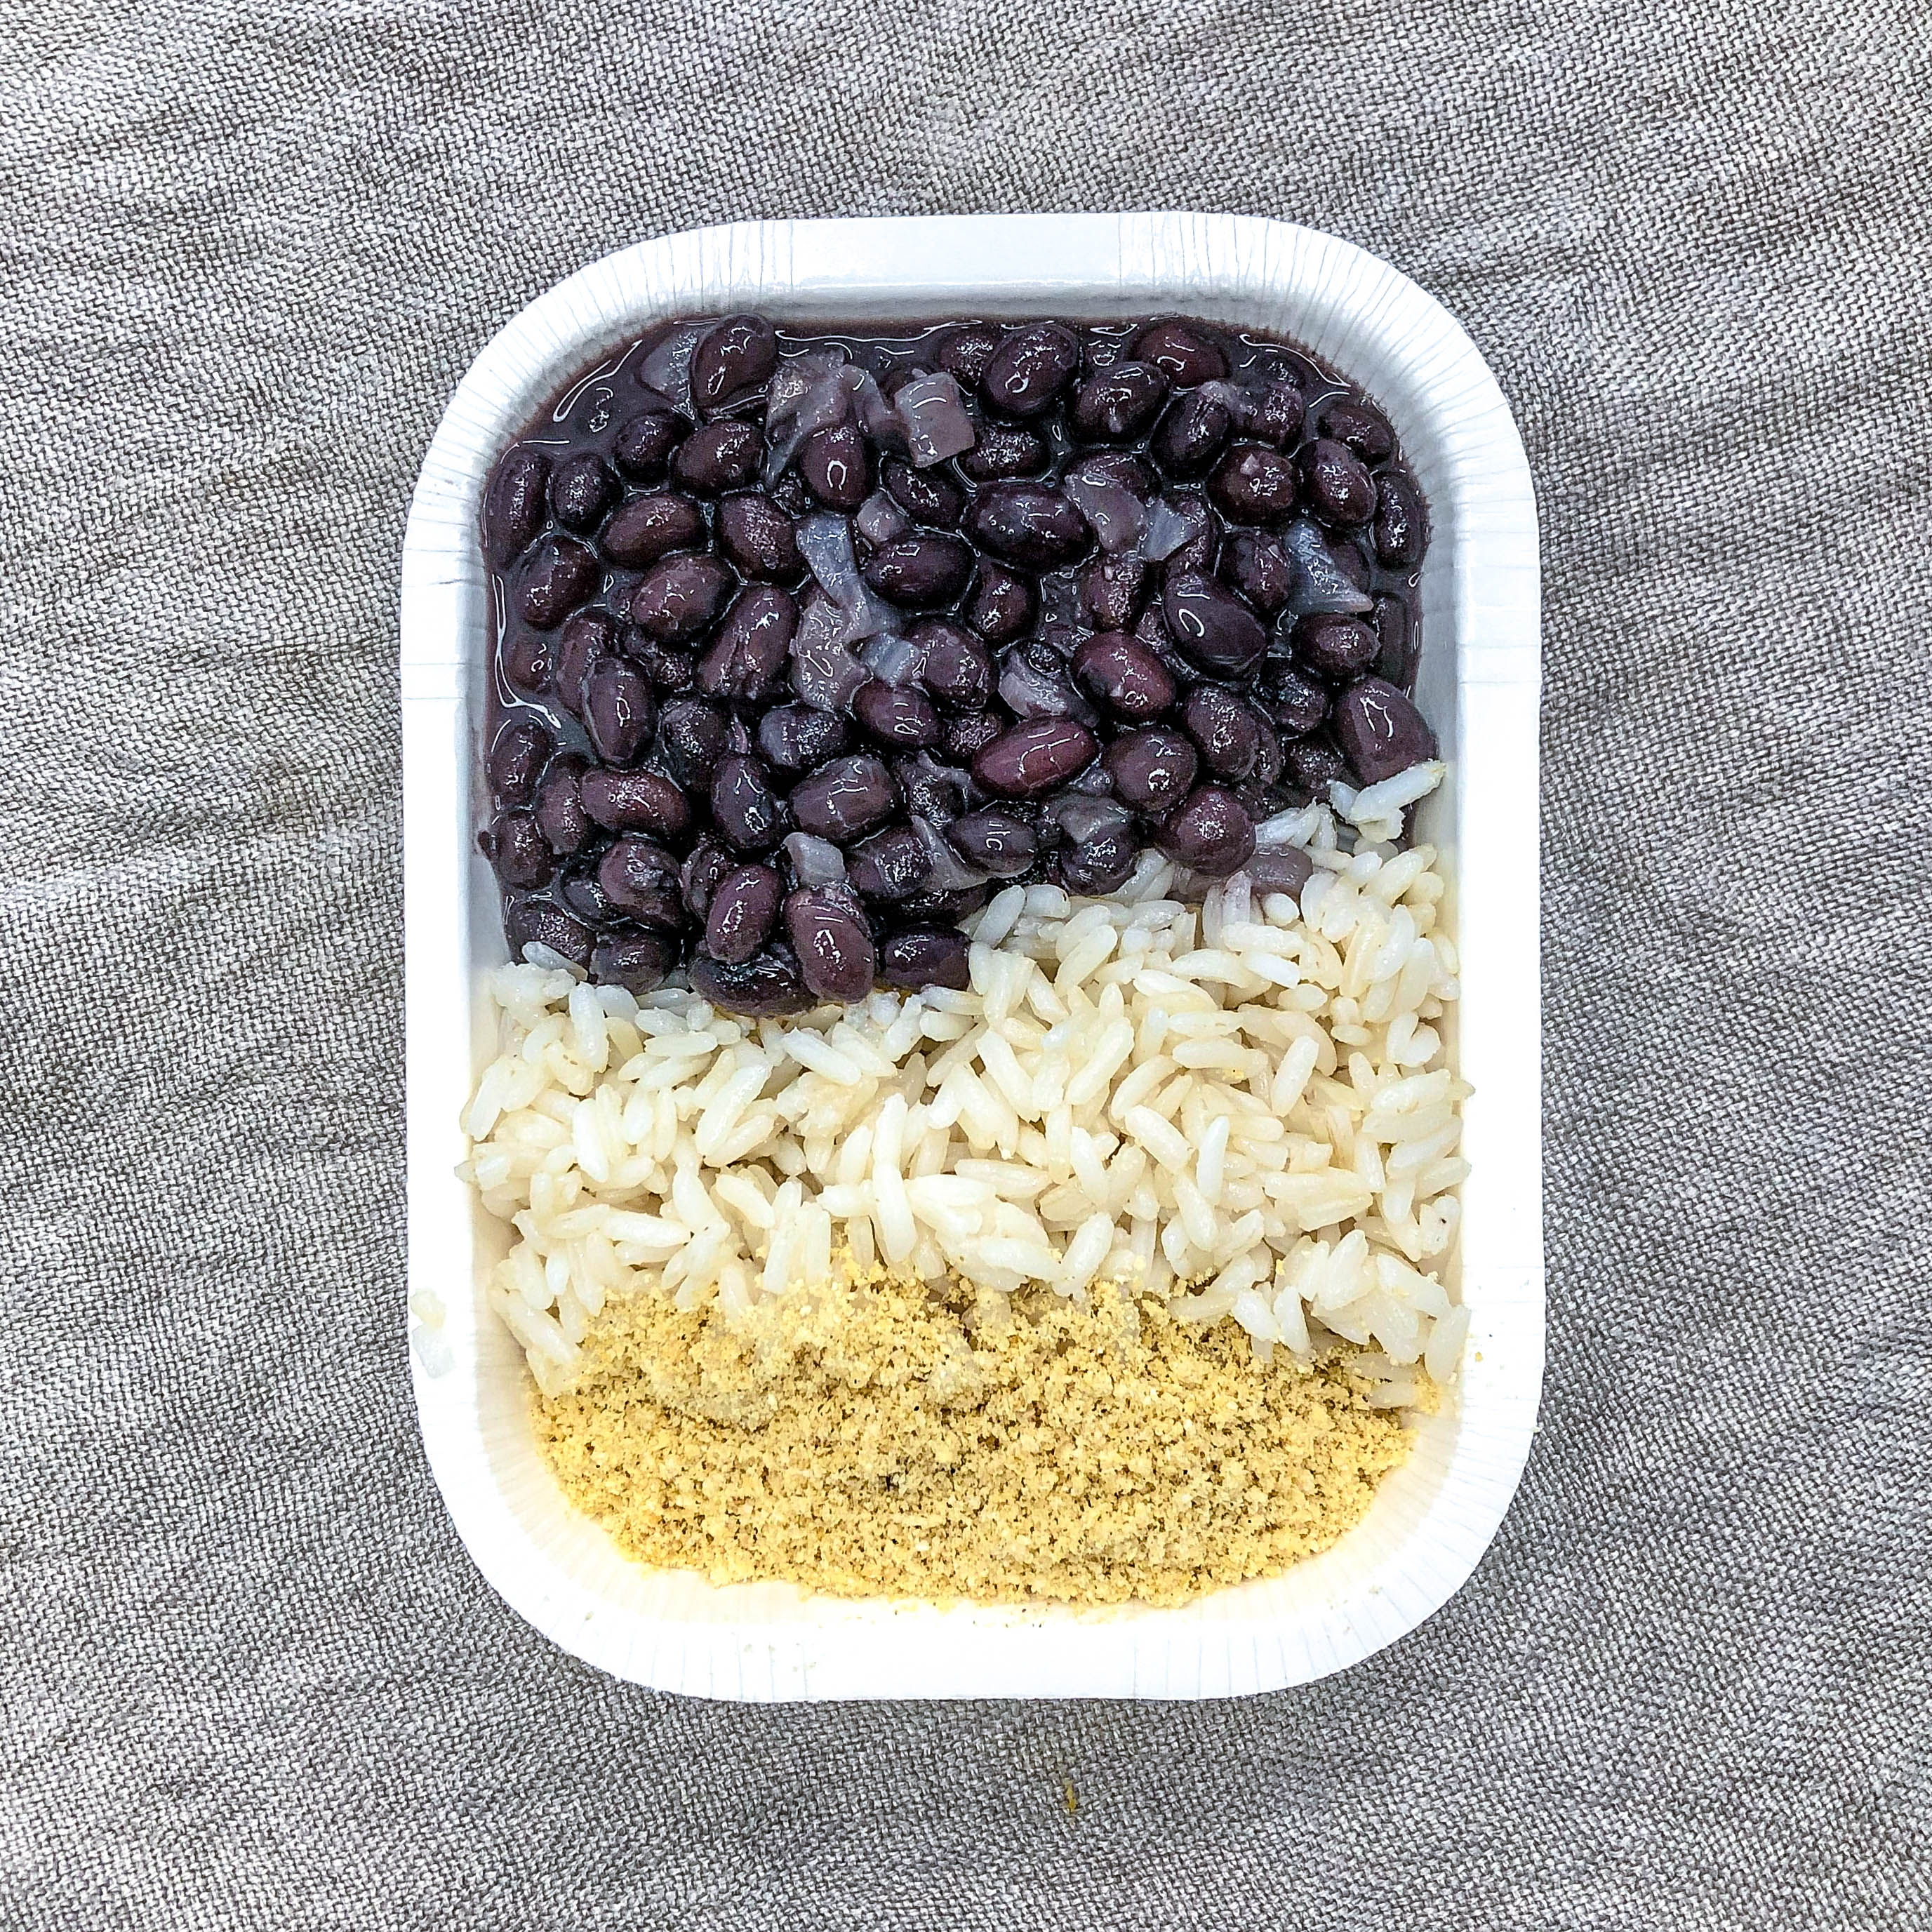 Vegan black beans